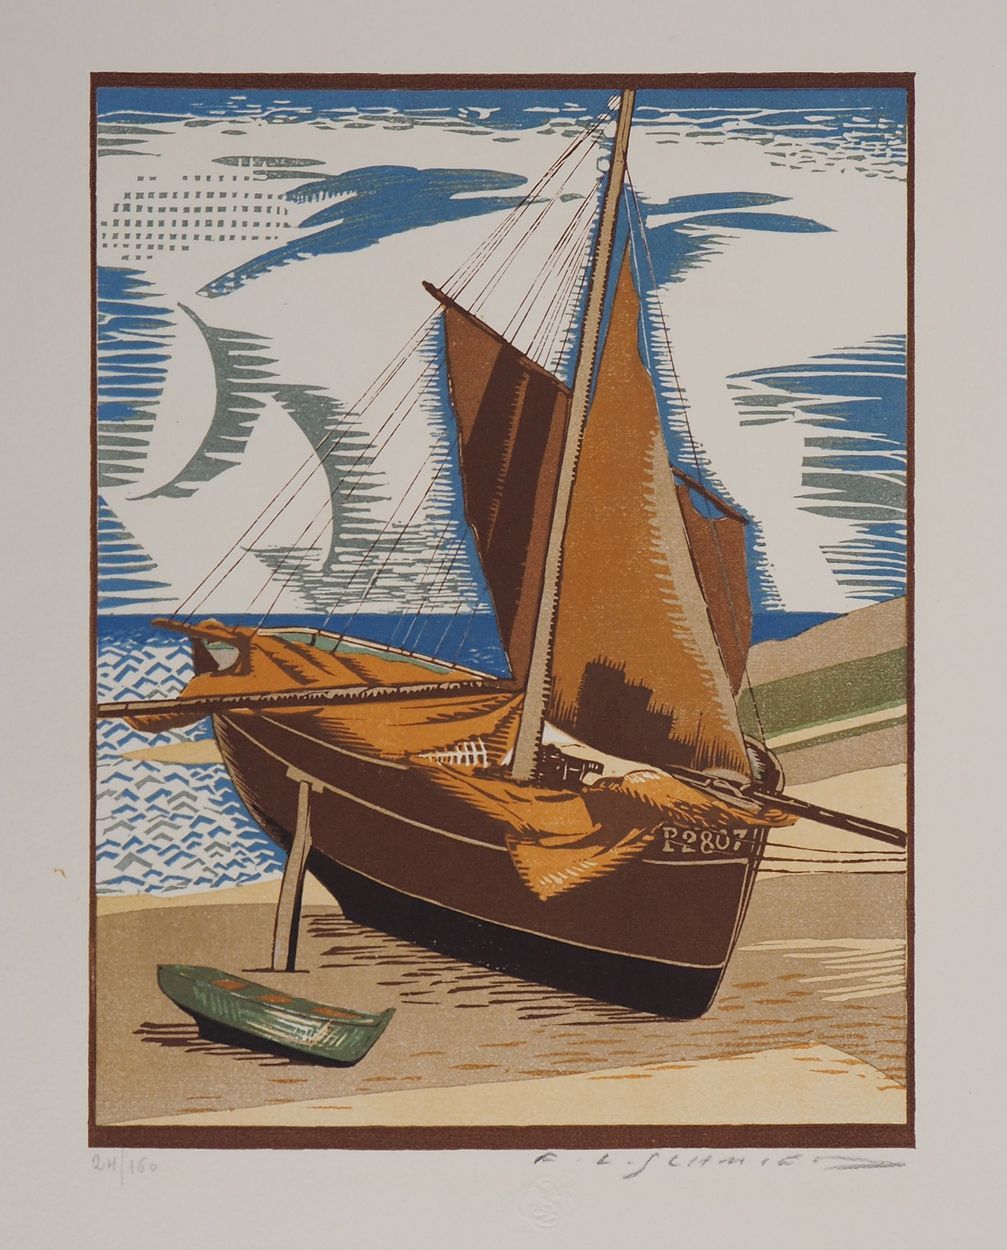 François-Louis Schmied François-Louis SCHMIED

Bretagne, Boot am Strand, 1924

O&hellip;